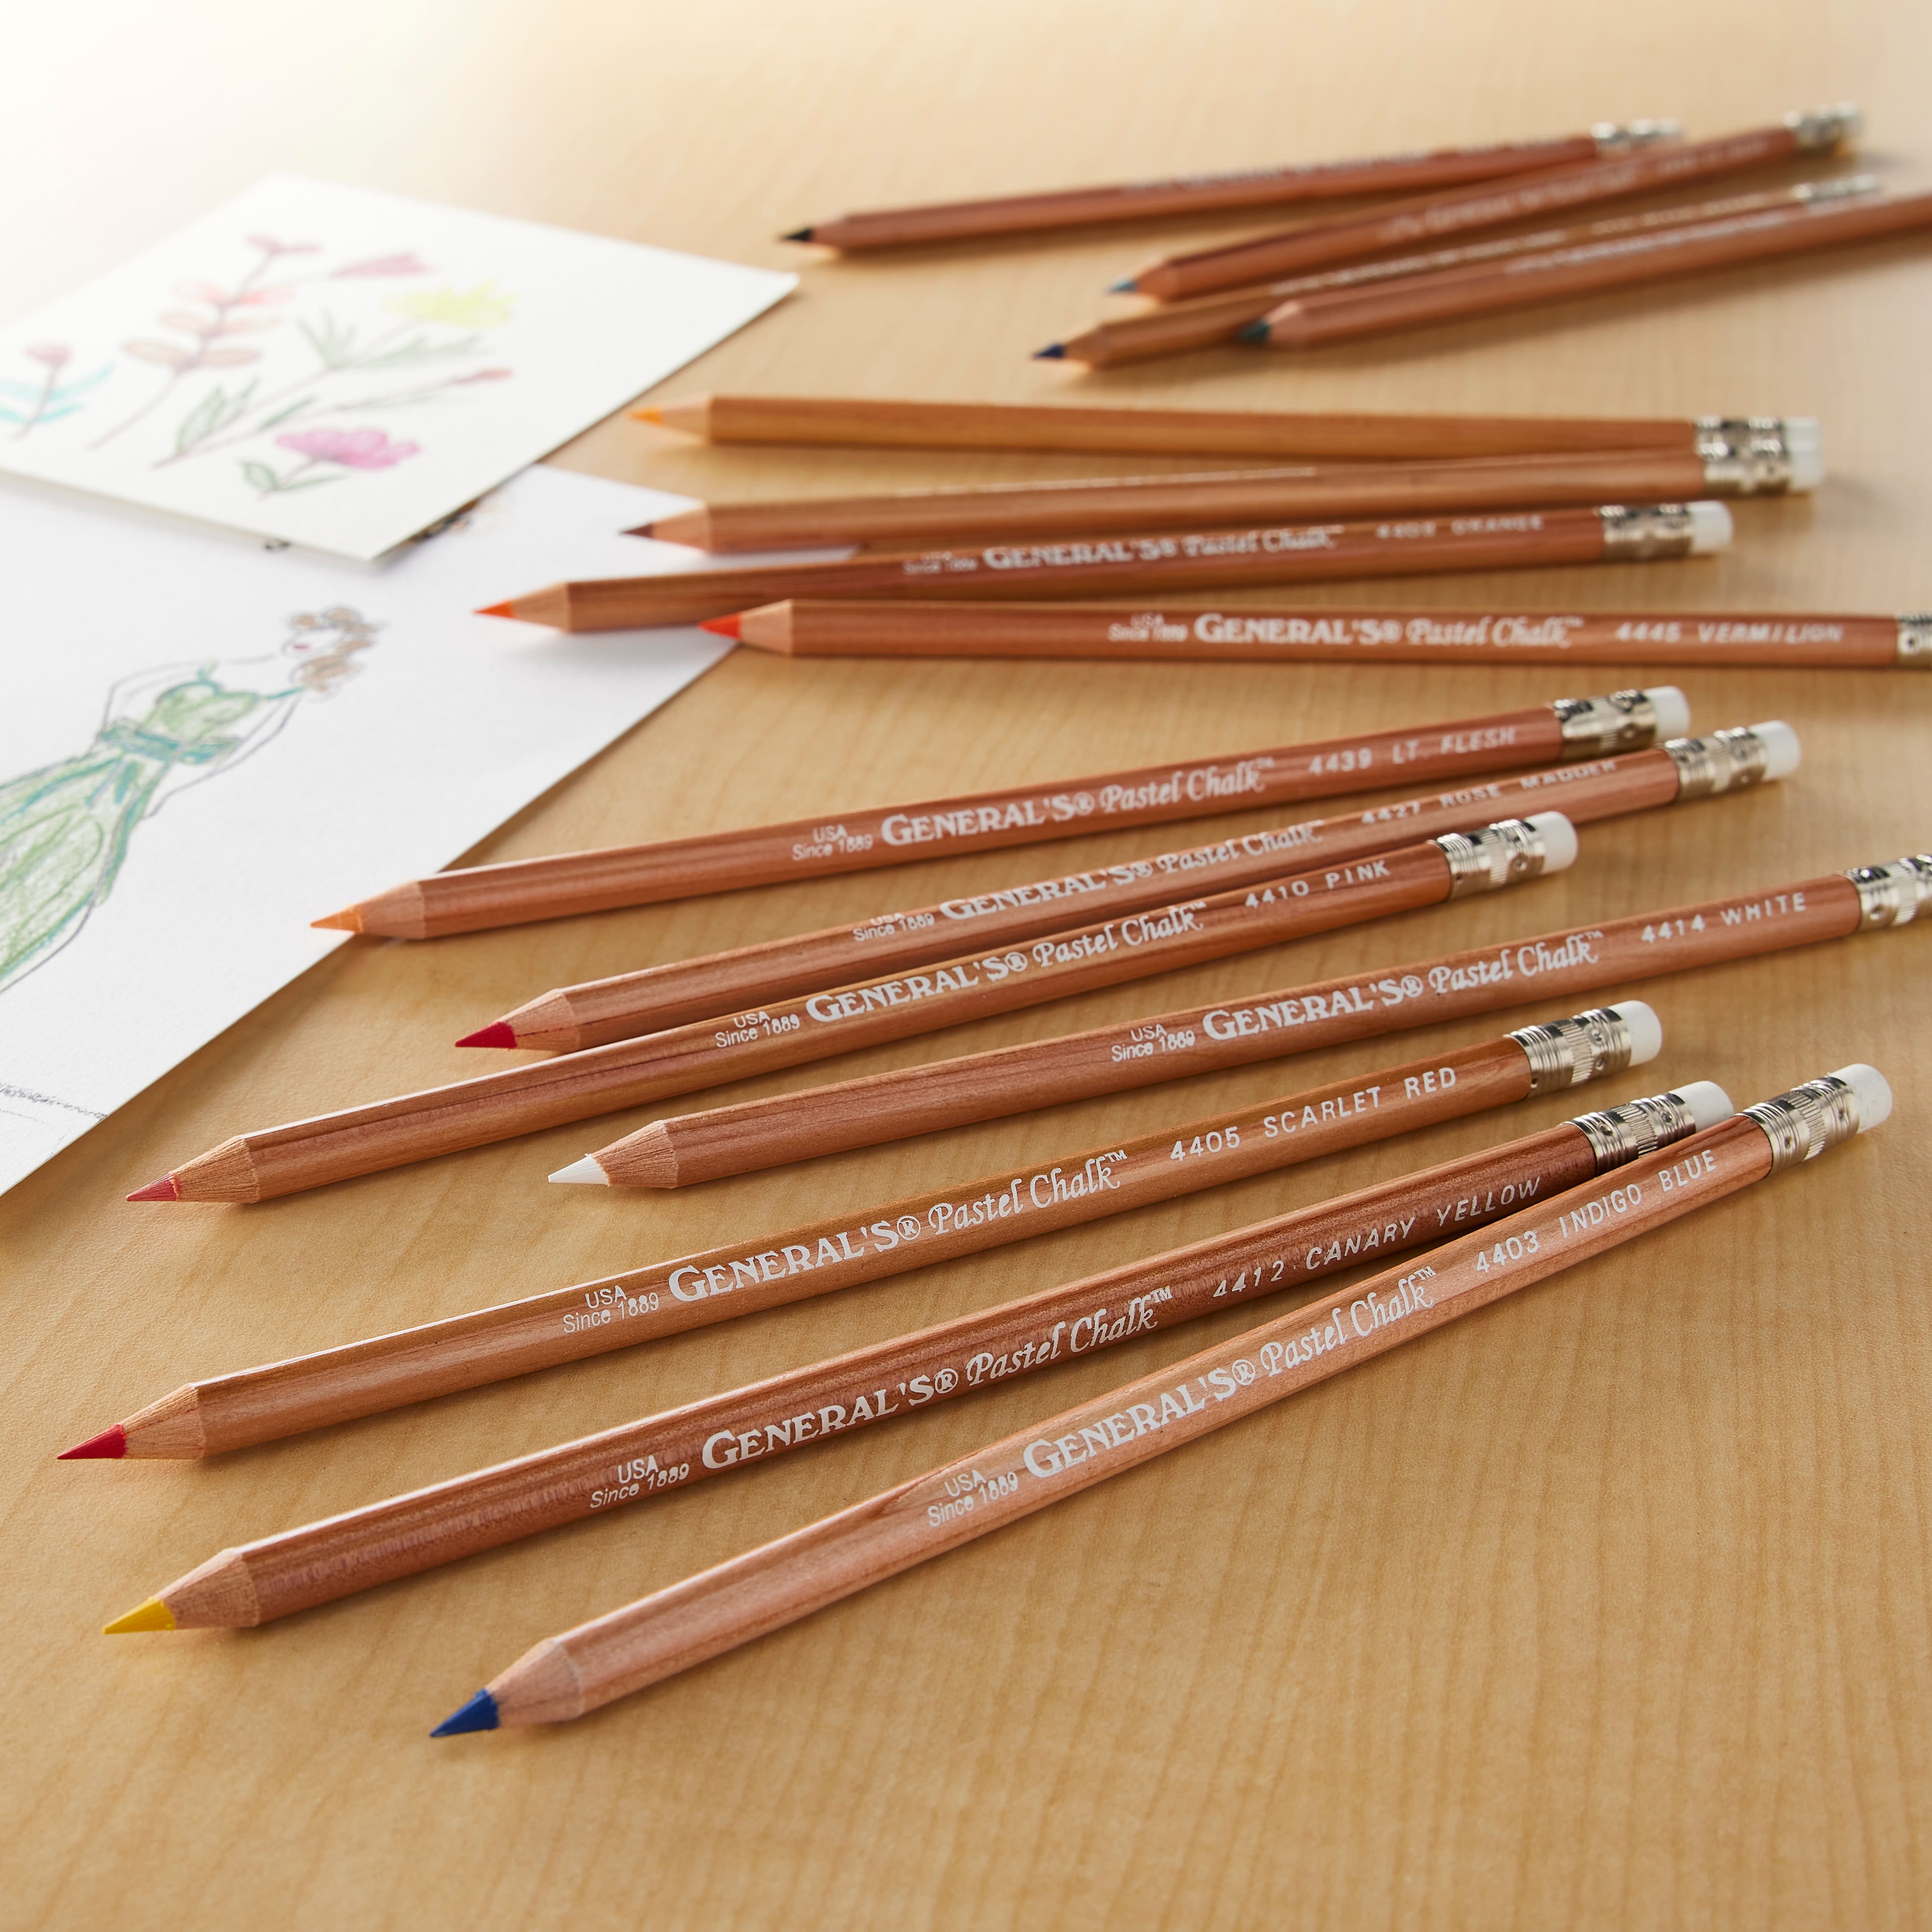 General Pencil 4400-12A General's Pastel Chalk Pencils, 12 Colors,  Multicolor, 7 x 1/4 x 1/4 in 